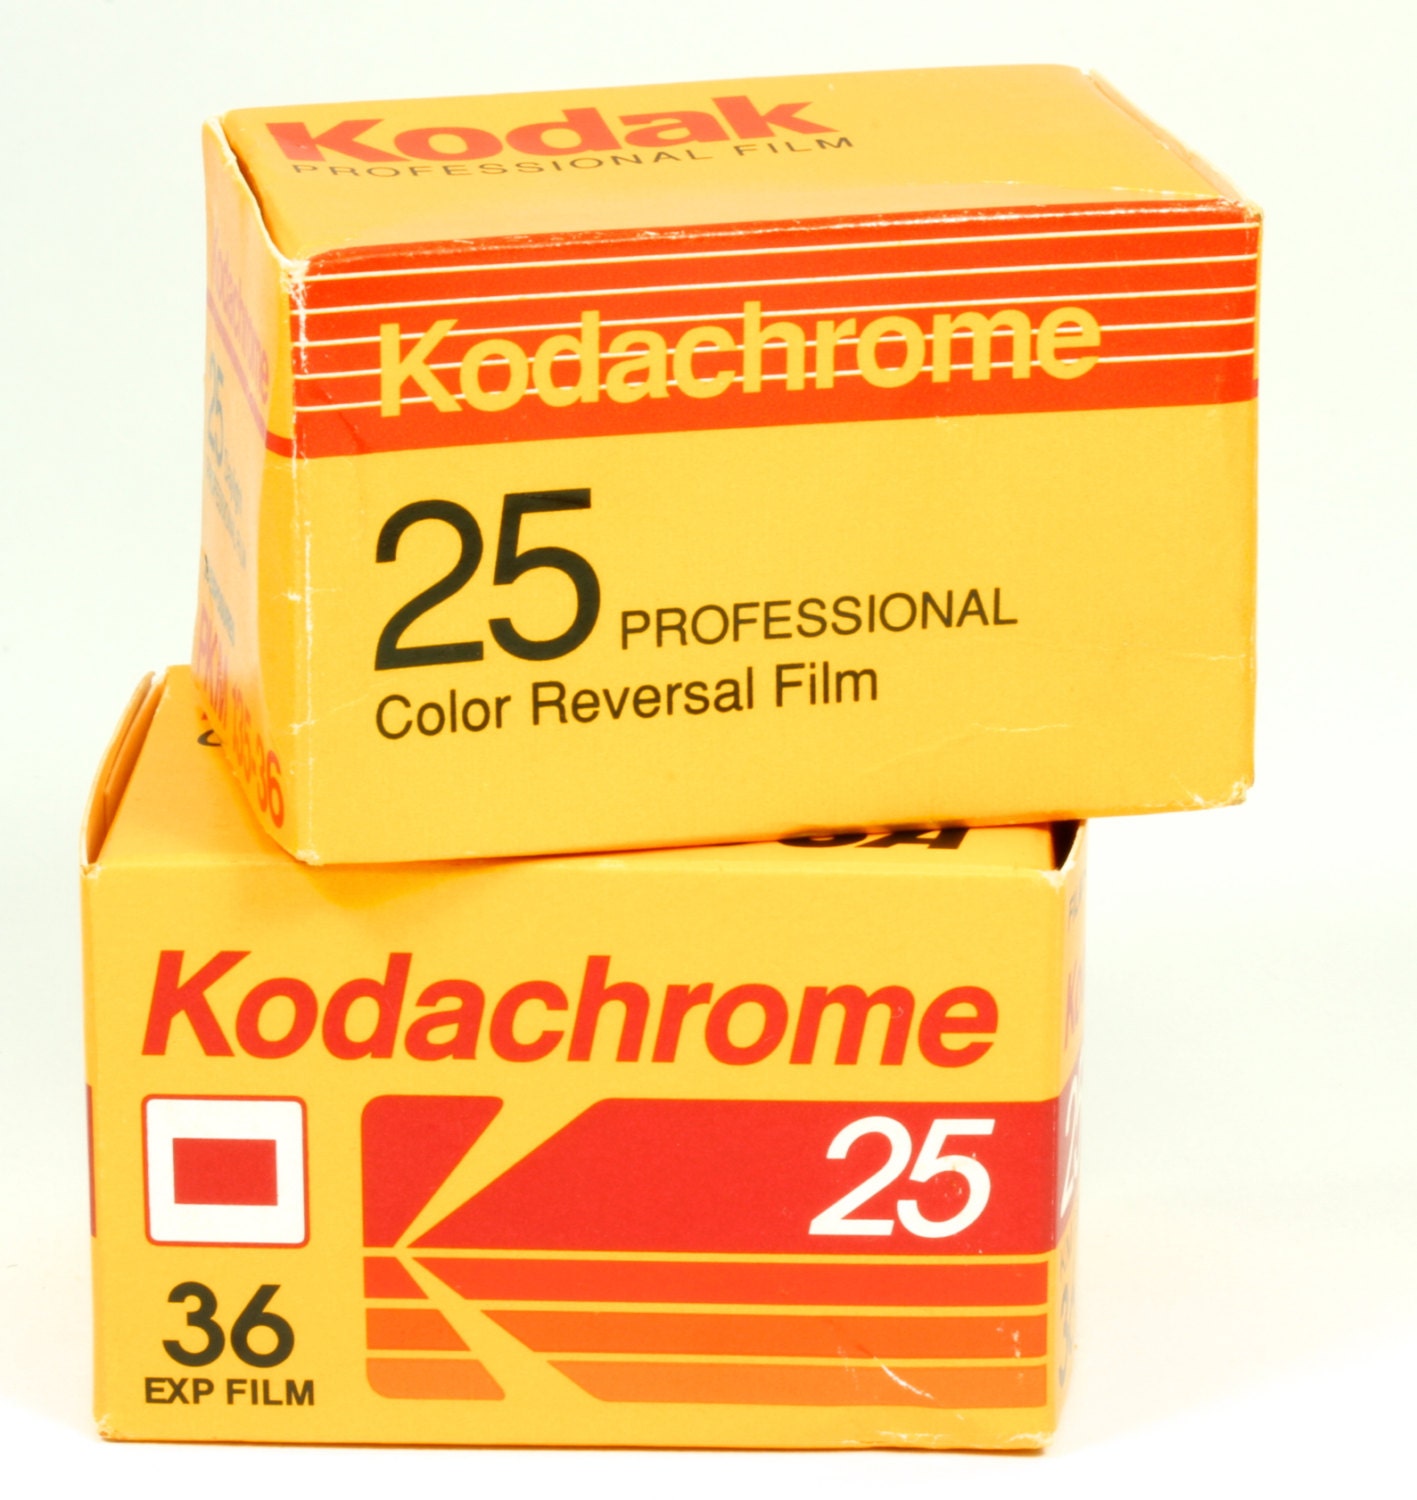 Eastman Kodak Company Unused Kodak Slide Film Kodachrome 25 Daylight Professional Film Yellow and Orange Photography 35mm Film